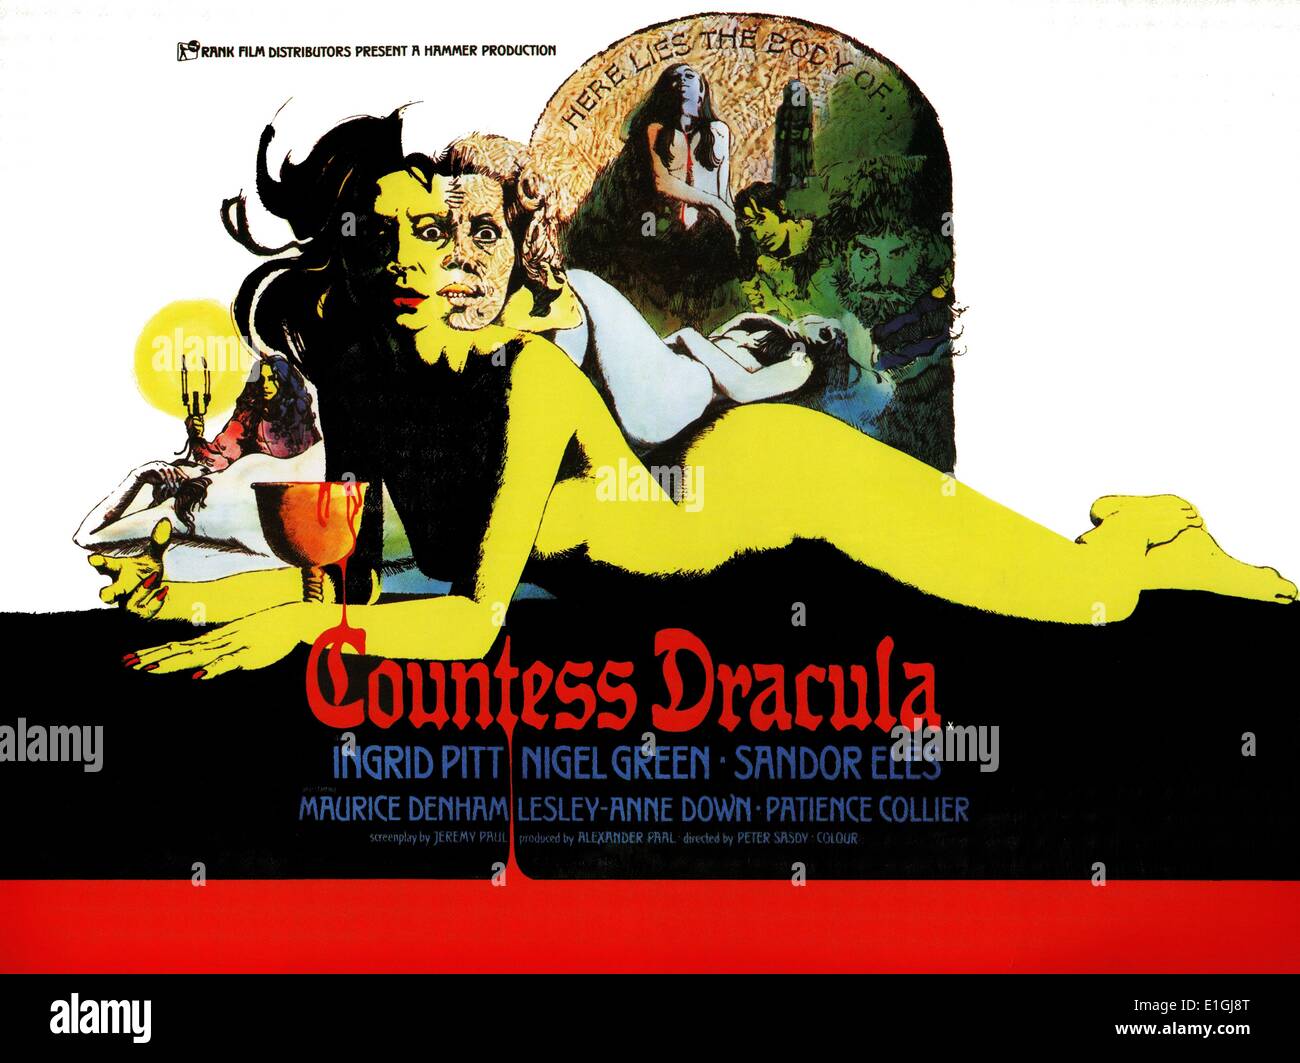 Countess Dracula a 1971 Hammer horror film starring Ingrid Pitt. Stock Photo